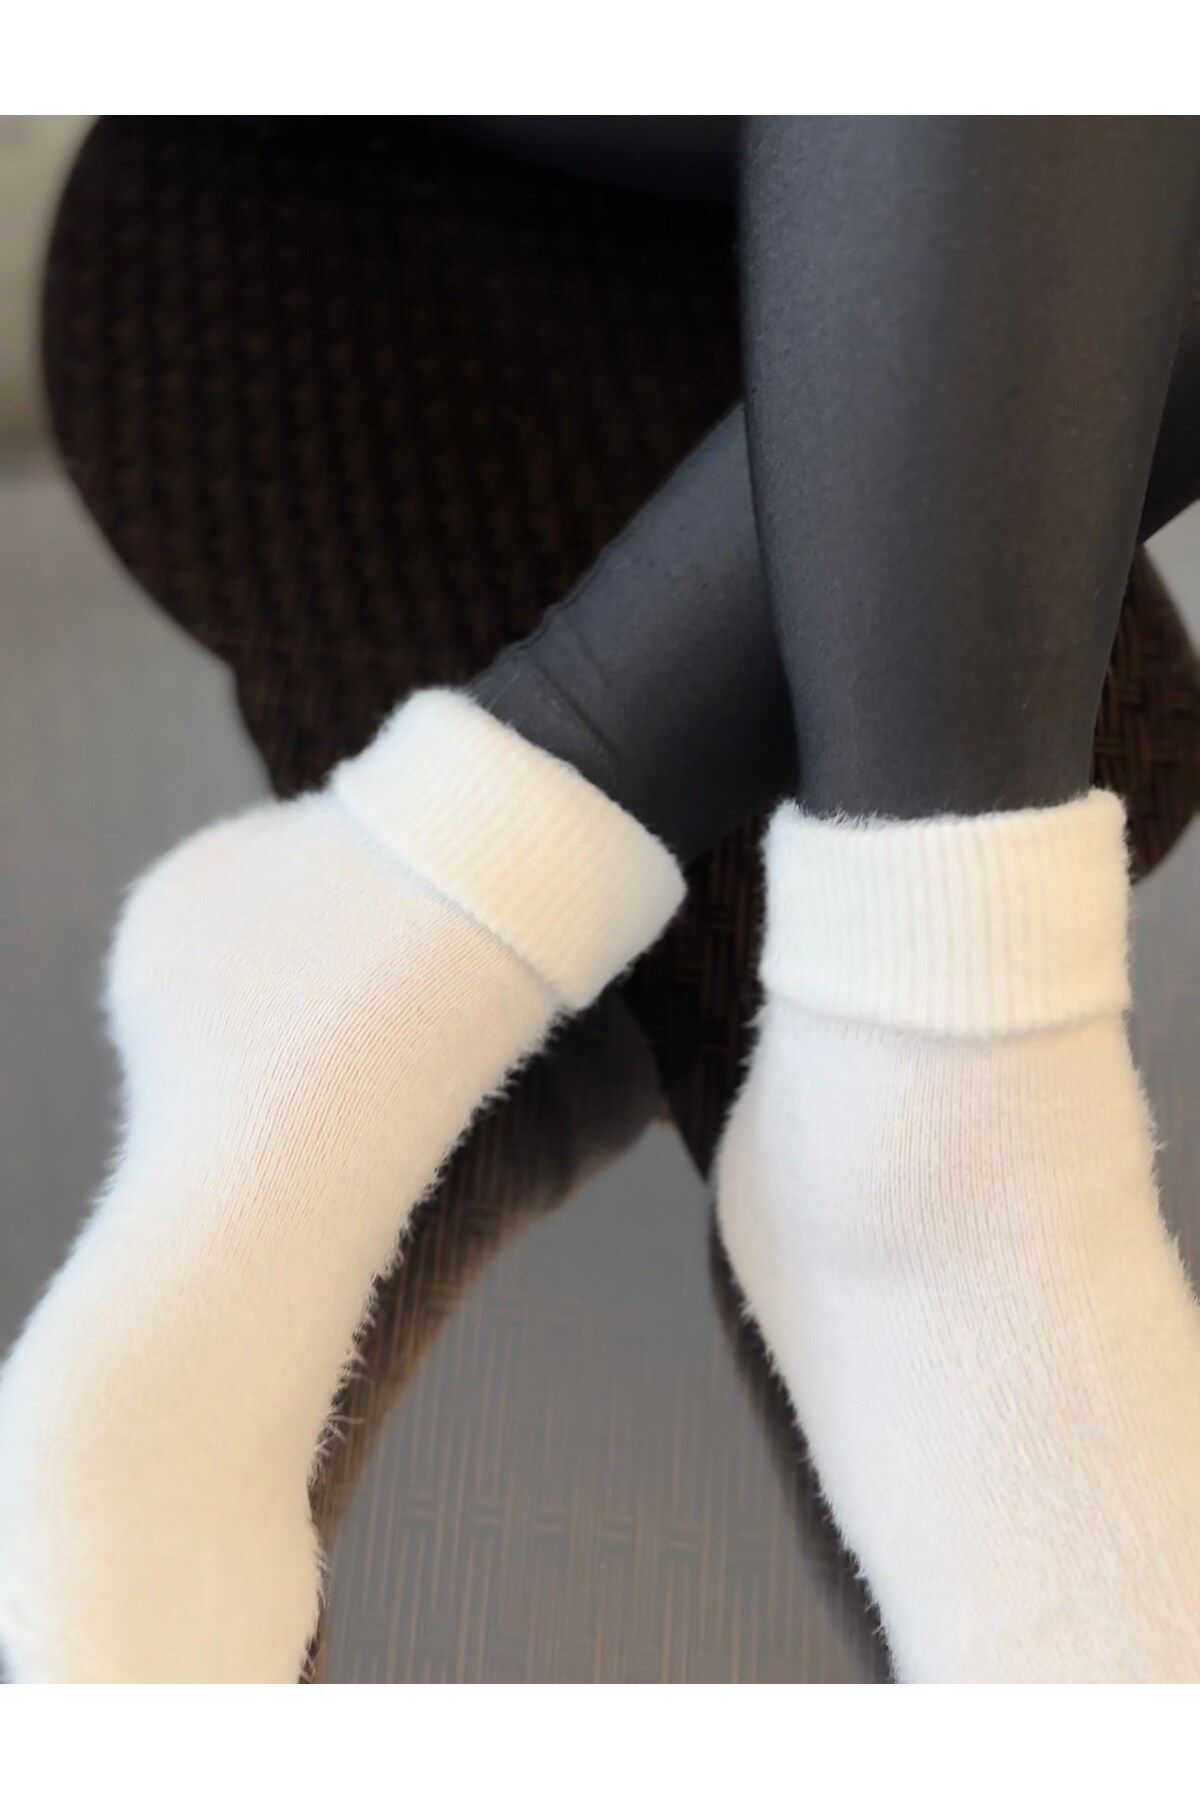 Magia Stile Unisex Kaşmir Soket Çorap 2'li Set (Beyaz-Mavi)